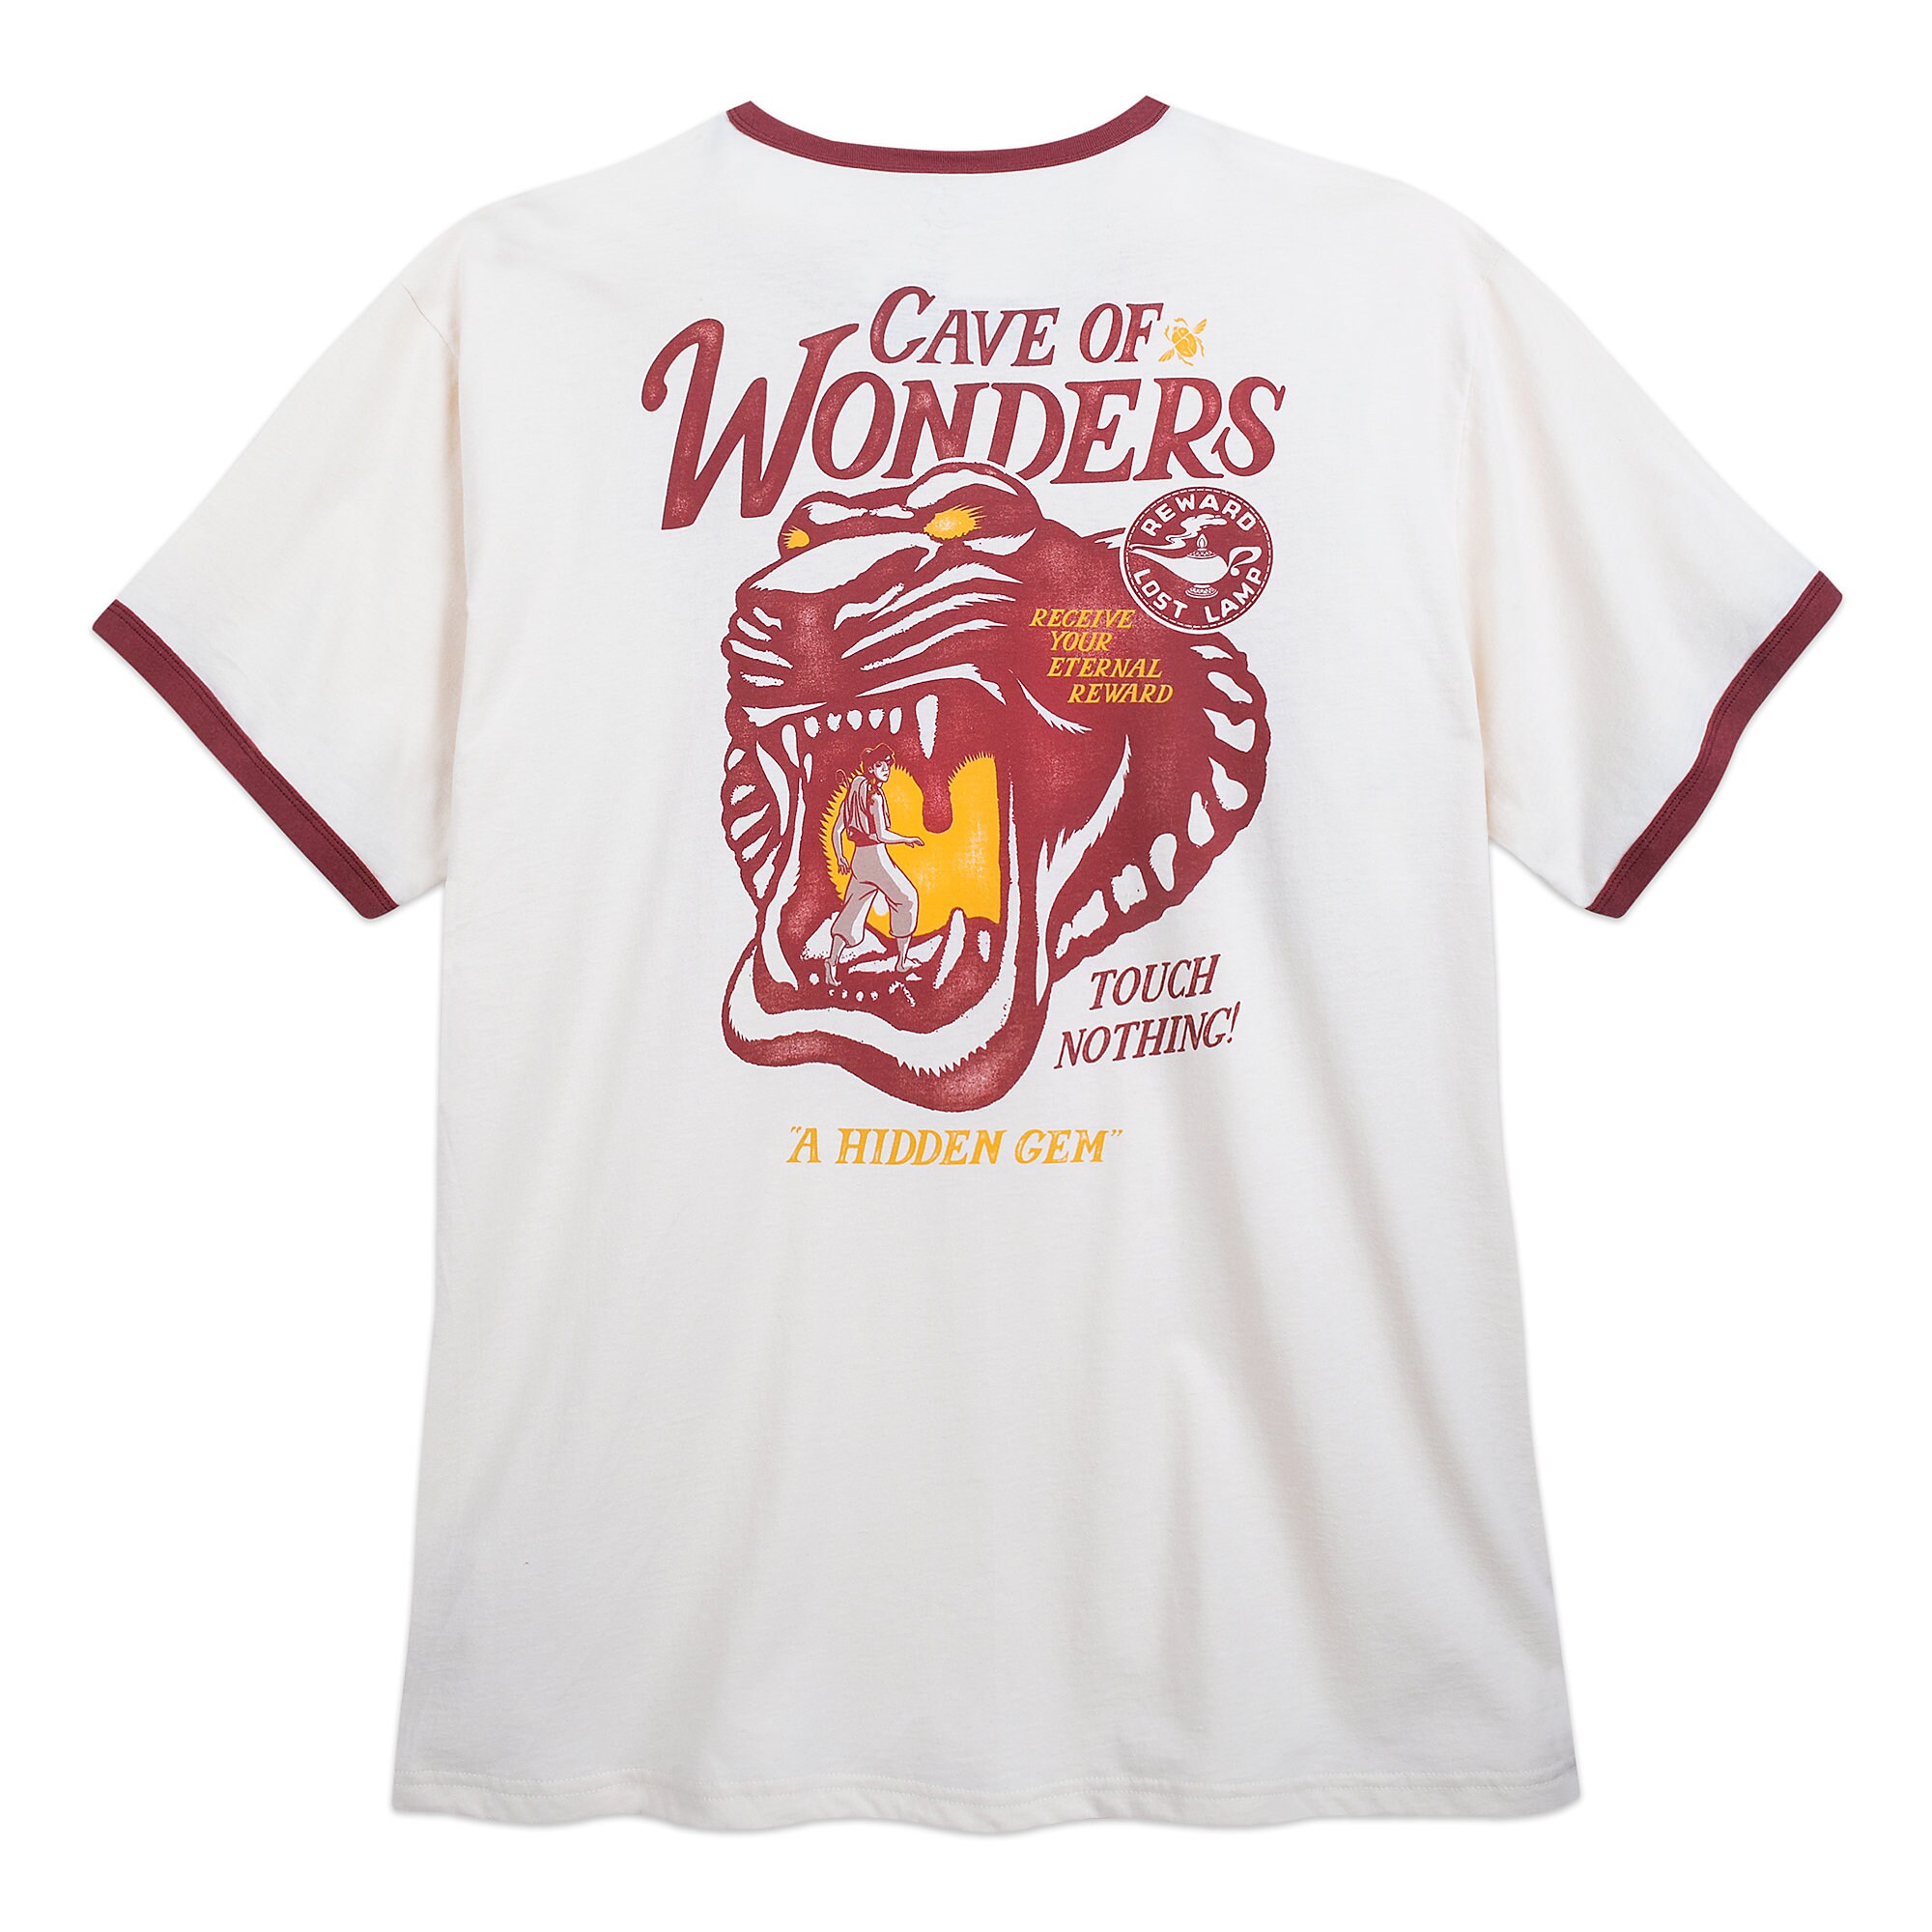 Cave of Wonders Ringer T-Shirt for Men - Aladdin - Extended Size